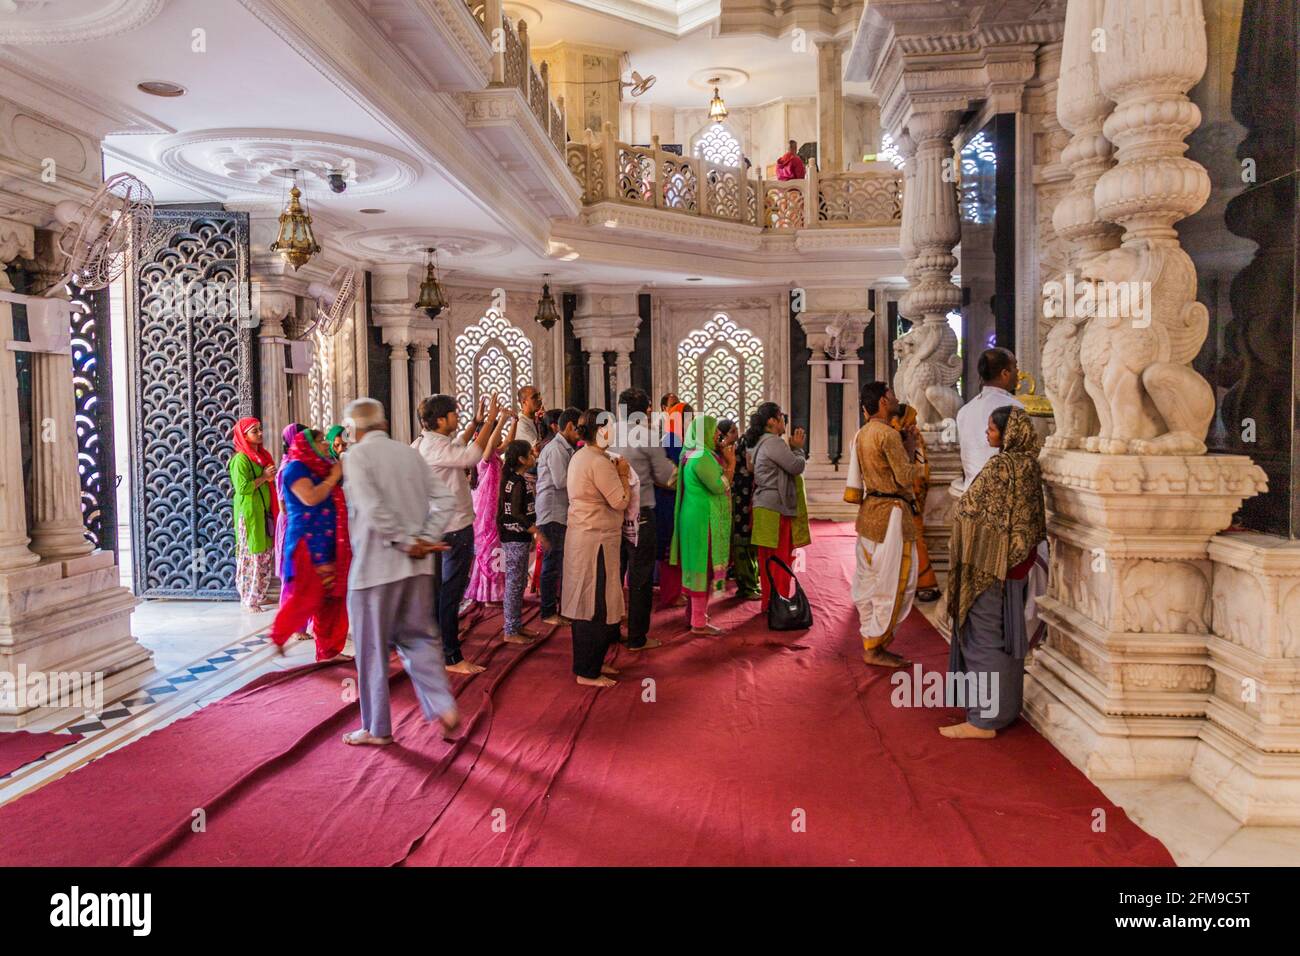 VRINDAVAN, INDE - 18 FÉVRIER 2017 : les habitants du temple Krishna Balaram Mandir (temple de l'organisation ISKCON) à Vrindavan, État de l'Uttar Pradesh, Inde Banque D'Images